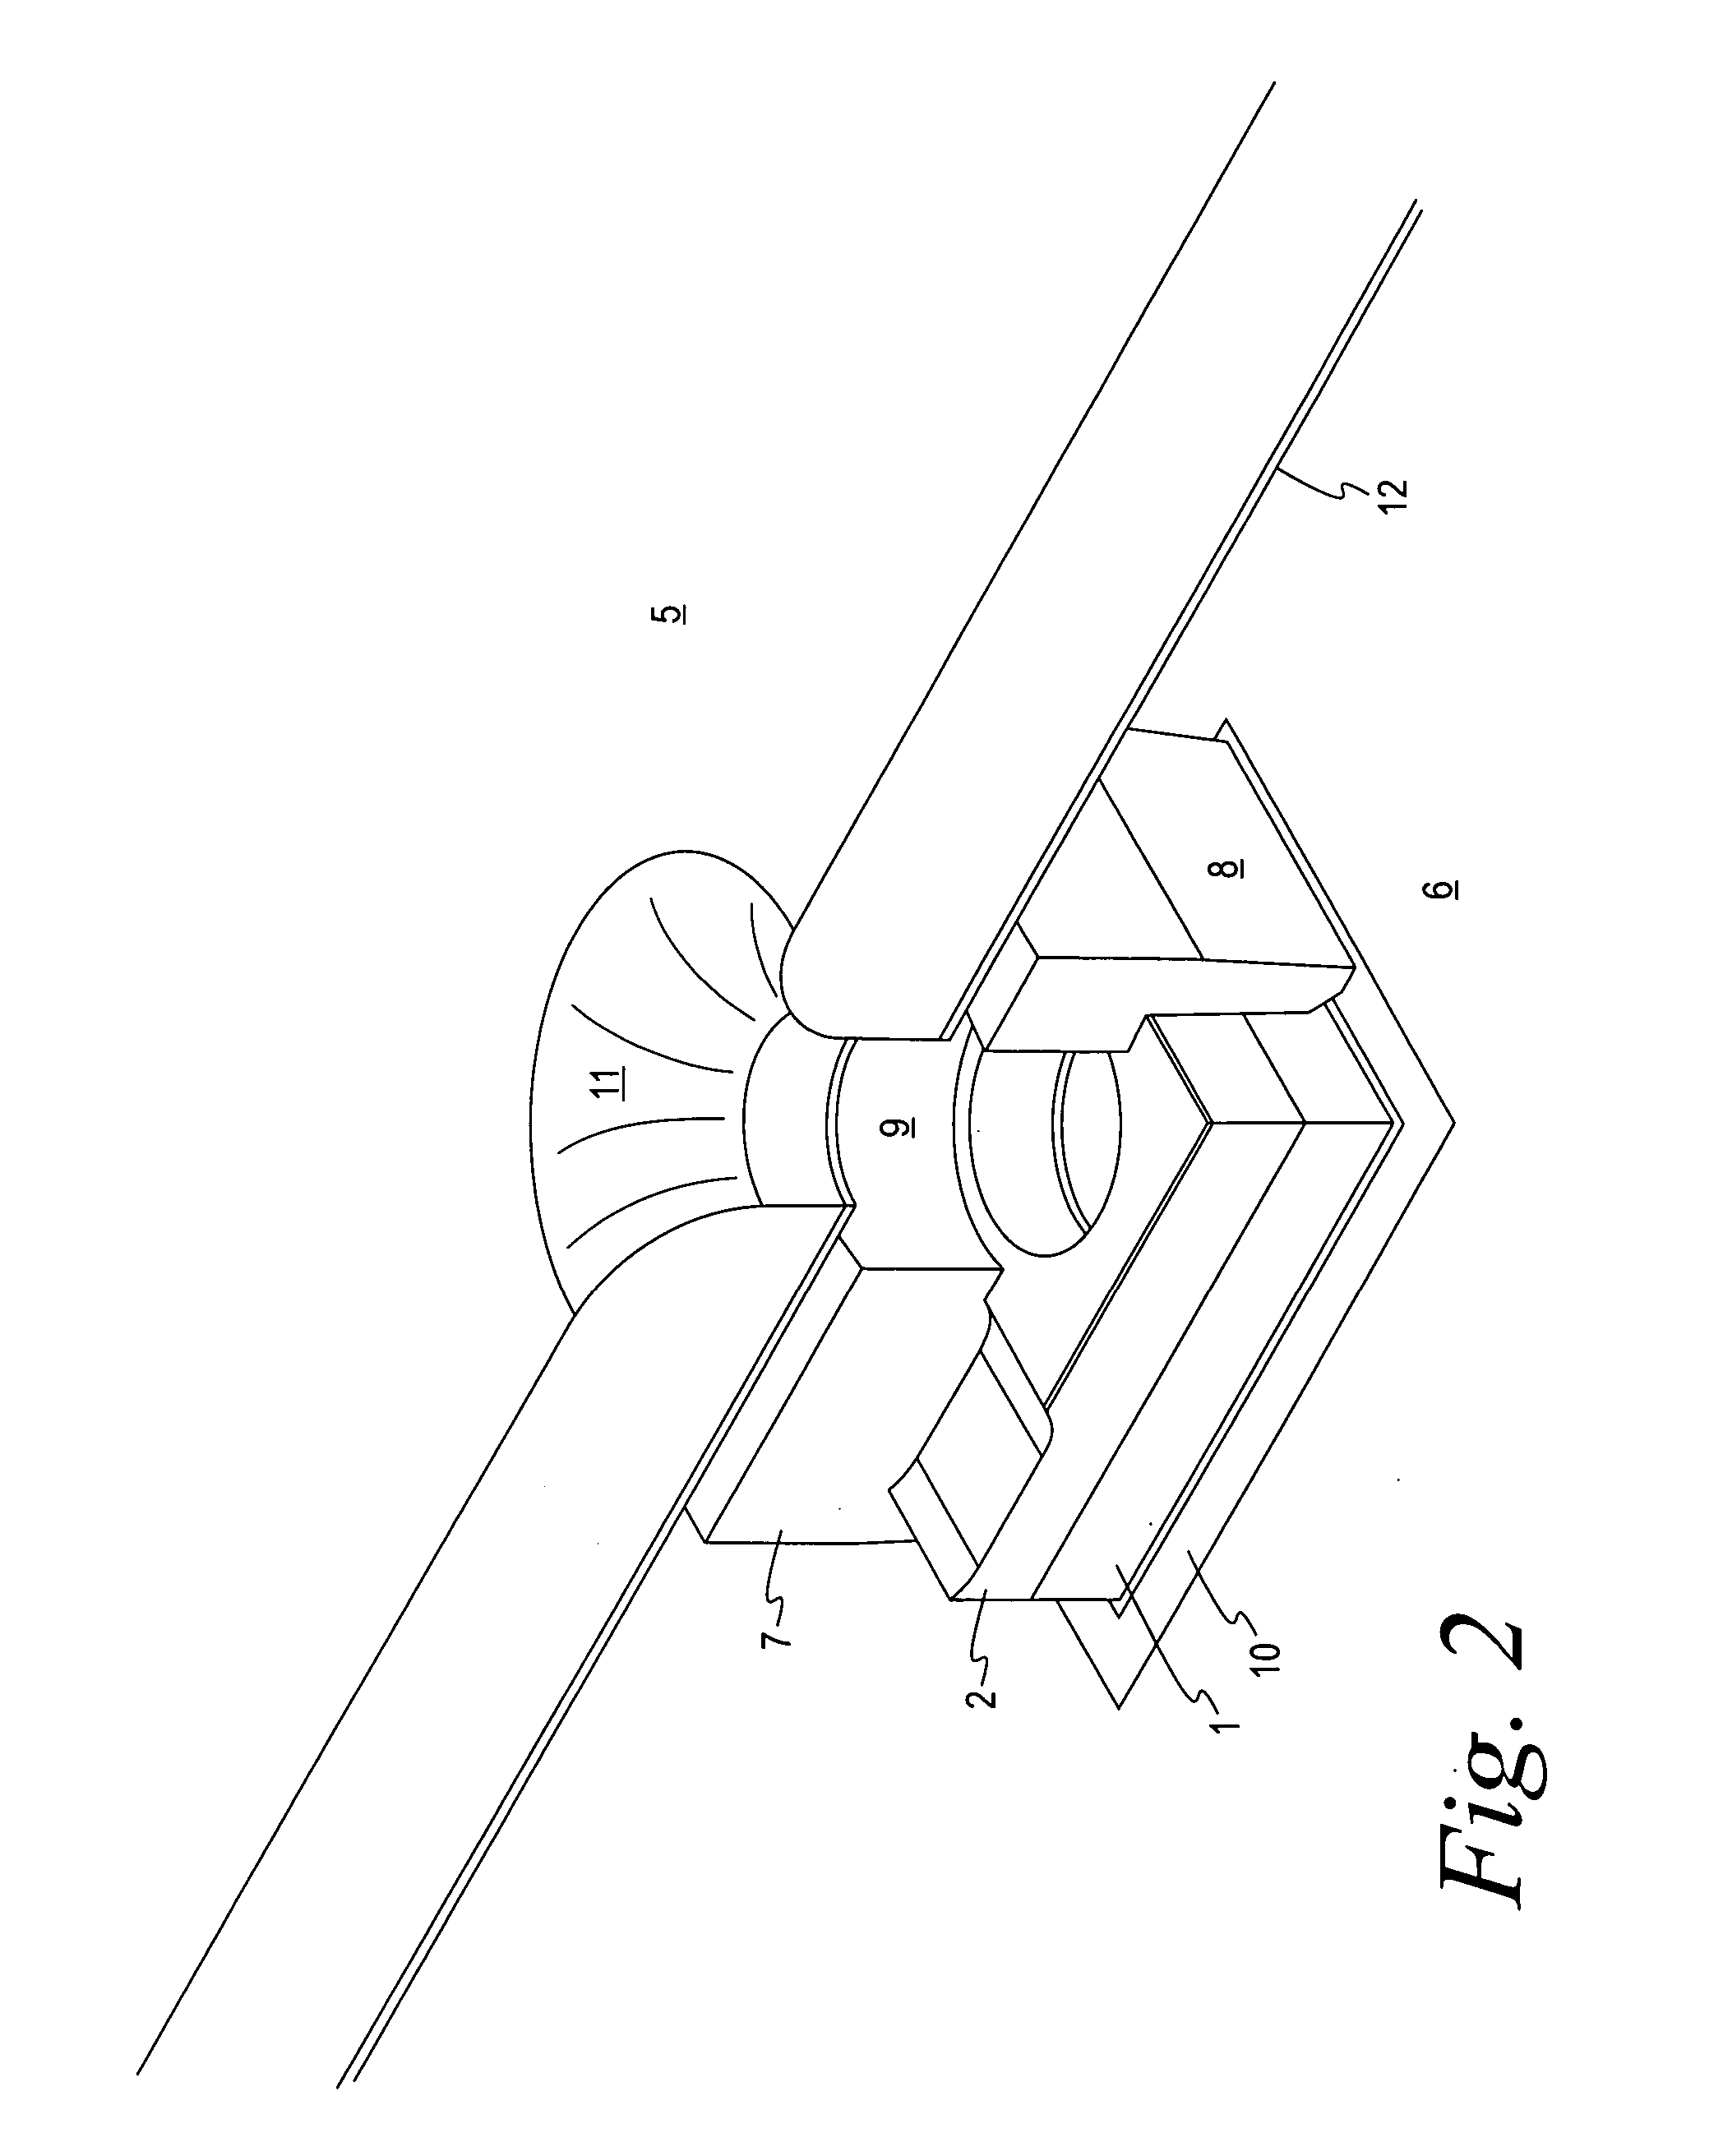 Elastomeric shield for miniature microphones